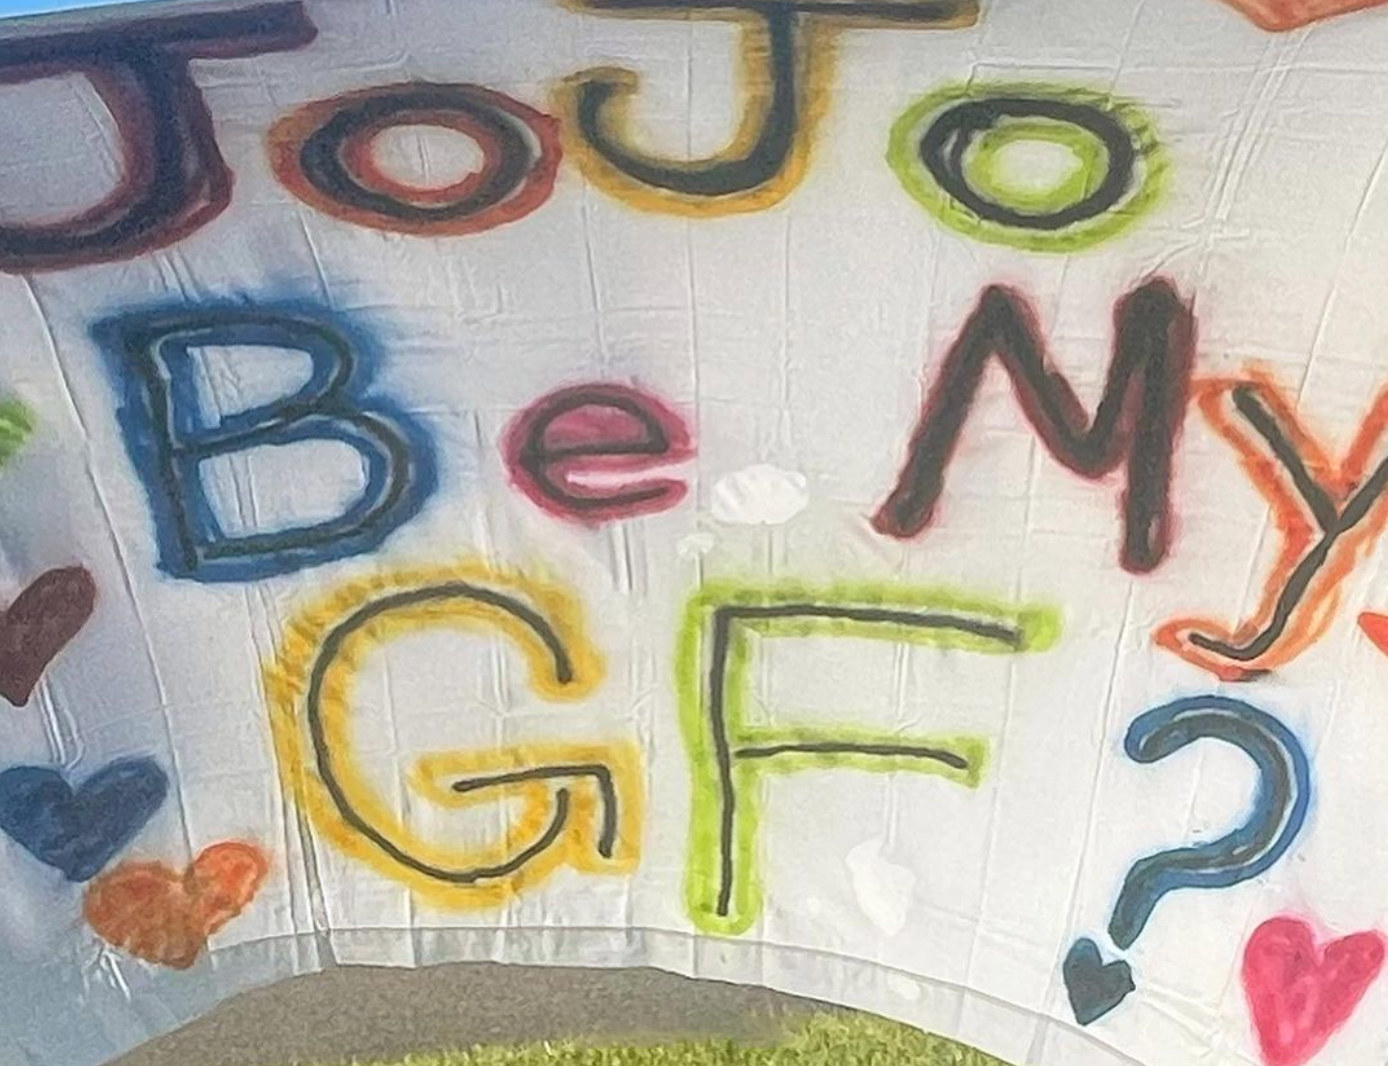 A sheet that has JoJo Be My GF?